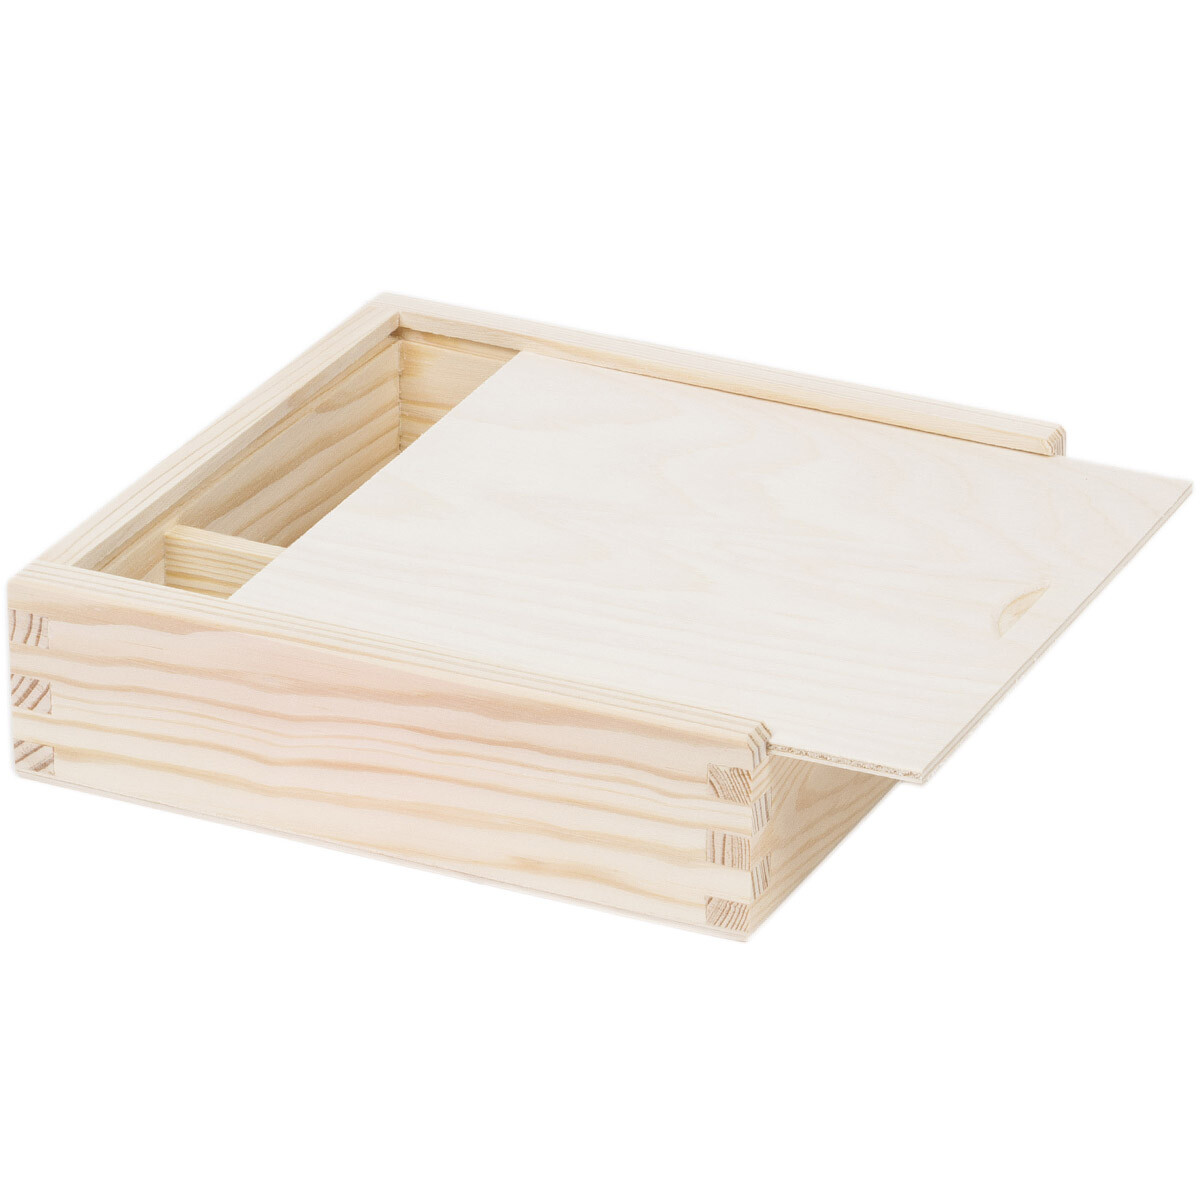 square wooden storage box